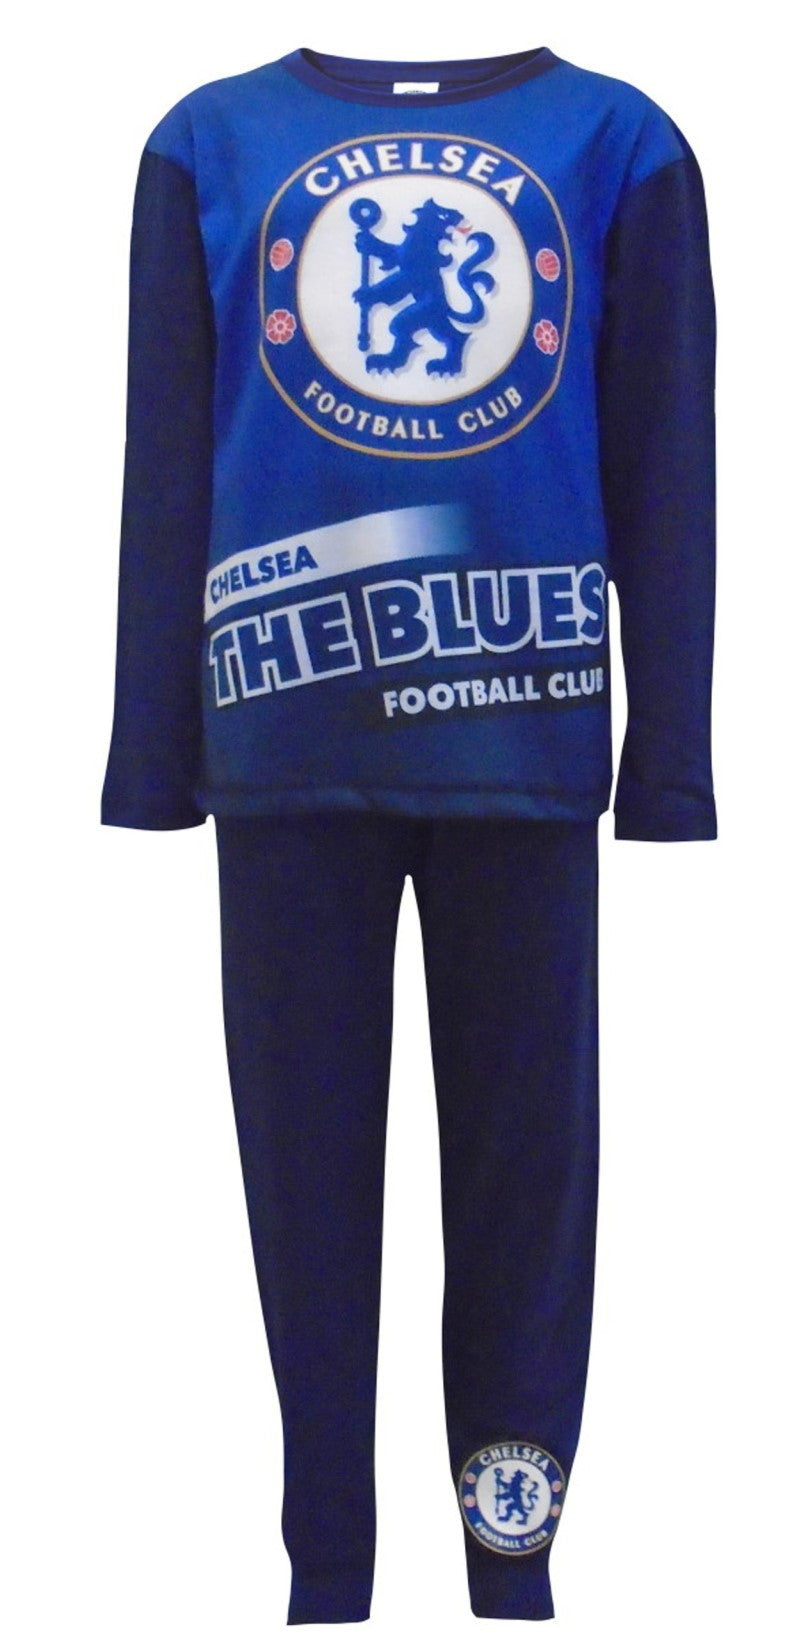 Chelsea Football Club Boys "2018 Design" Pyjamas